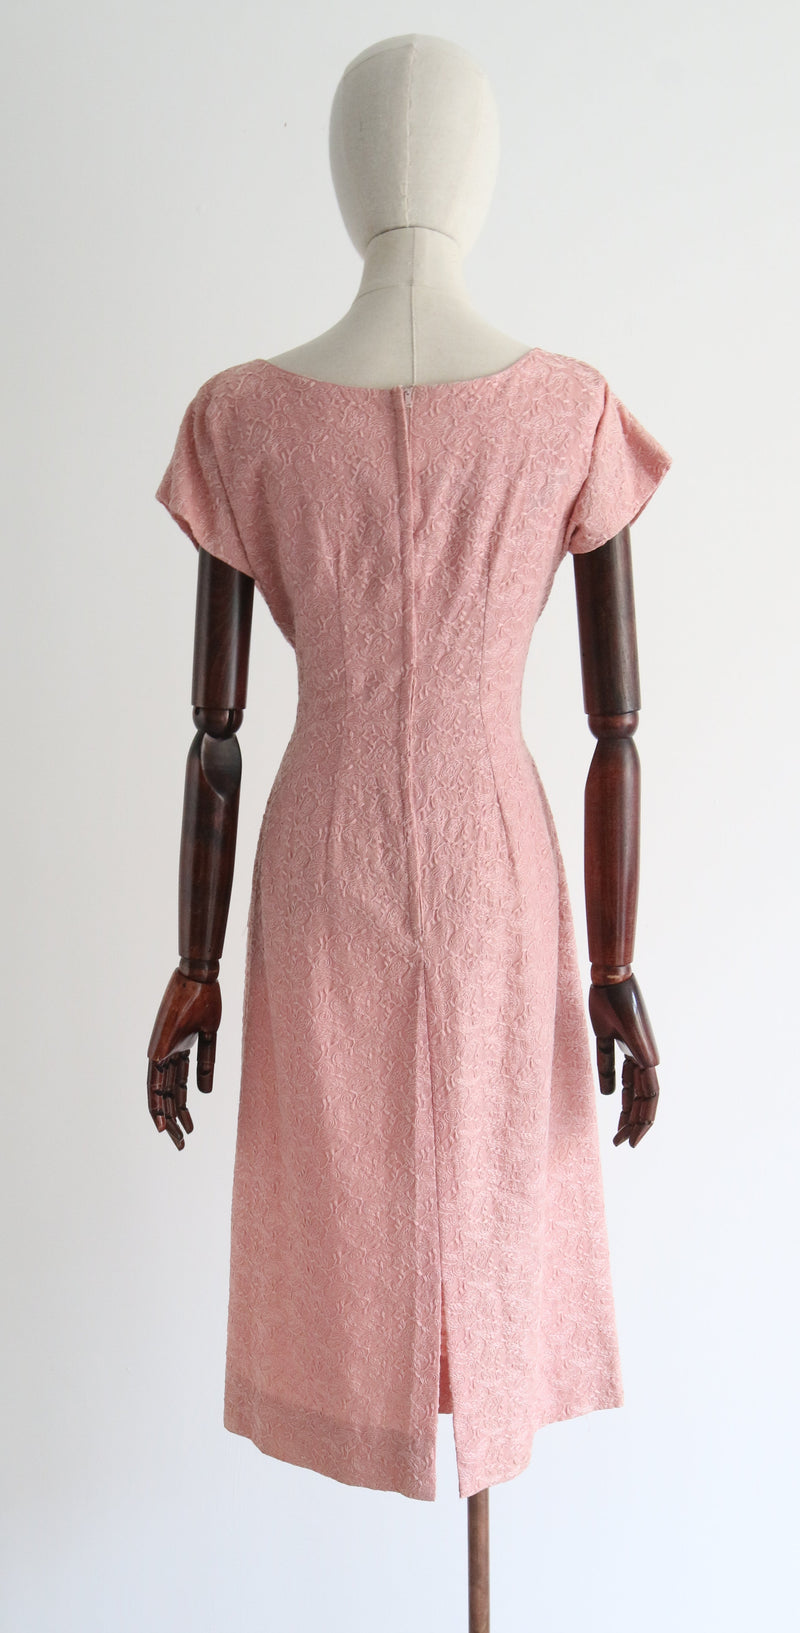 "Pink Floral Embroidery" Vintage 1950's Pink Floral Embroidered Dress UK 12 US 8